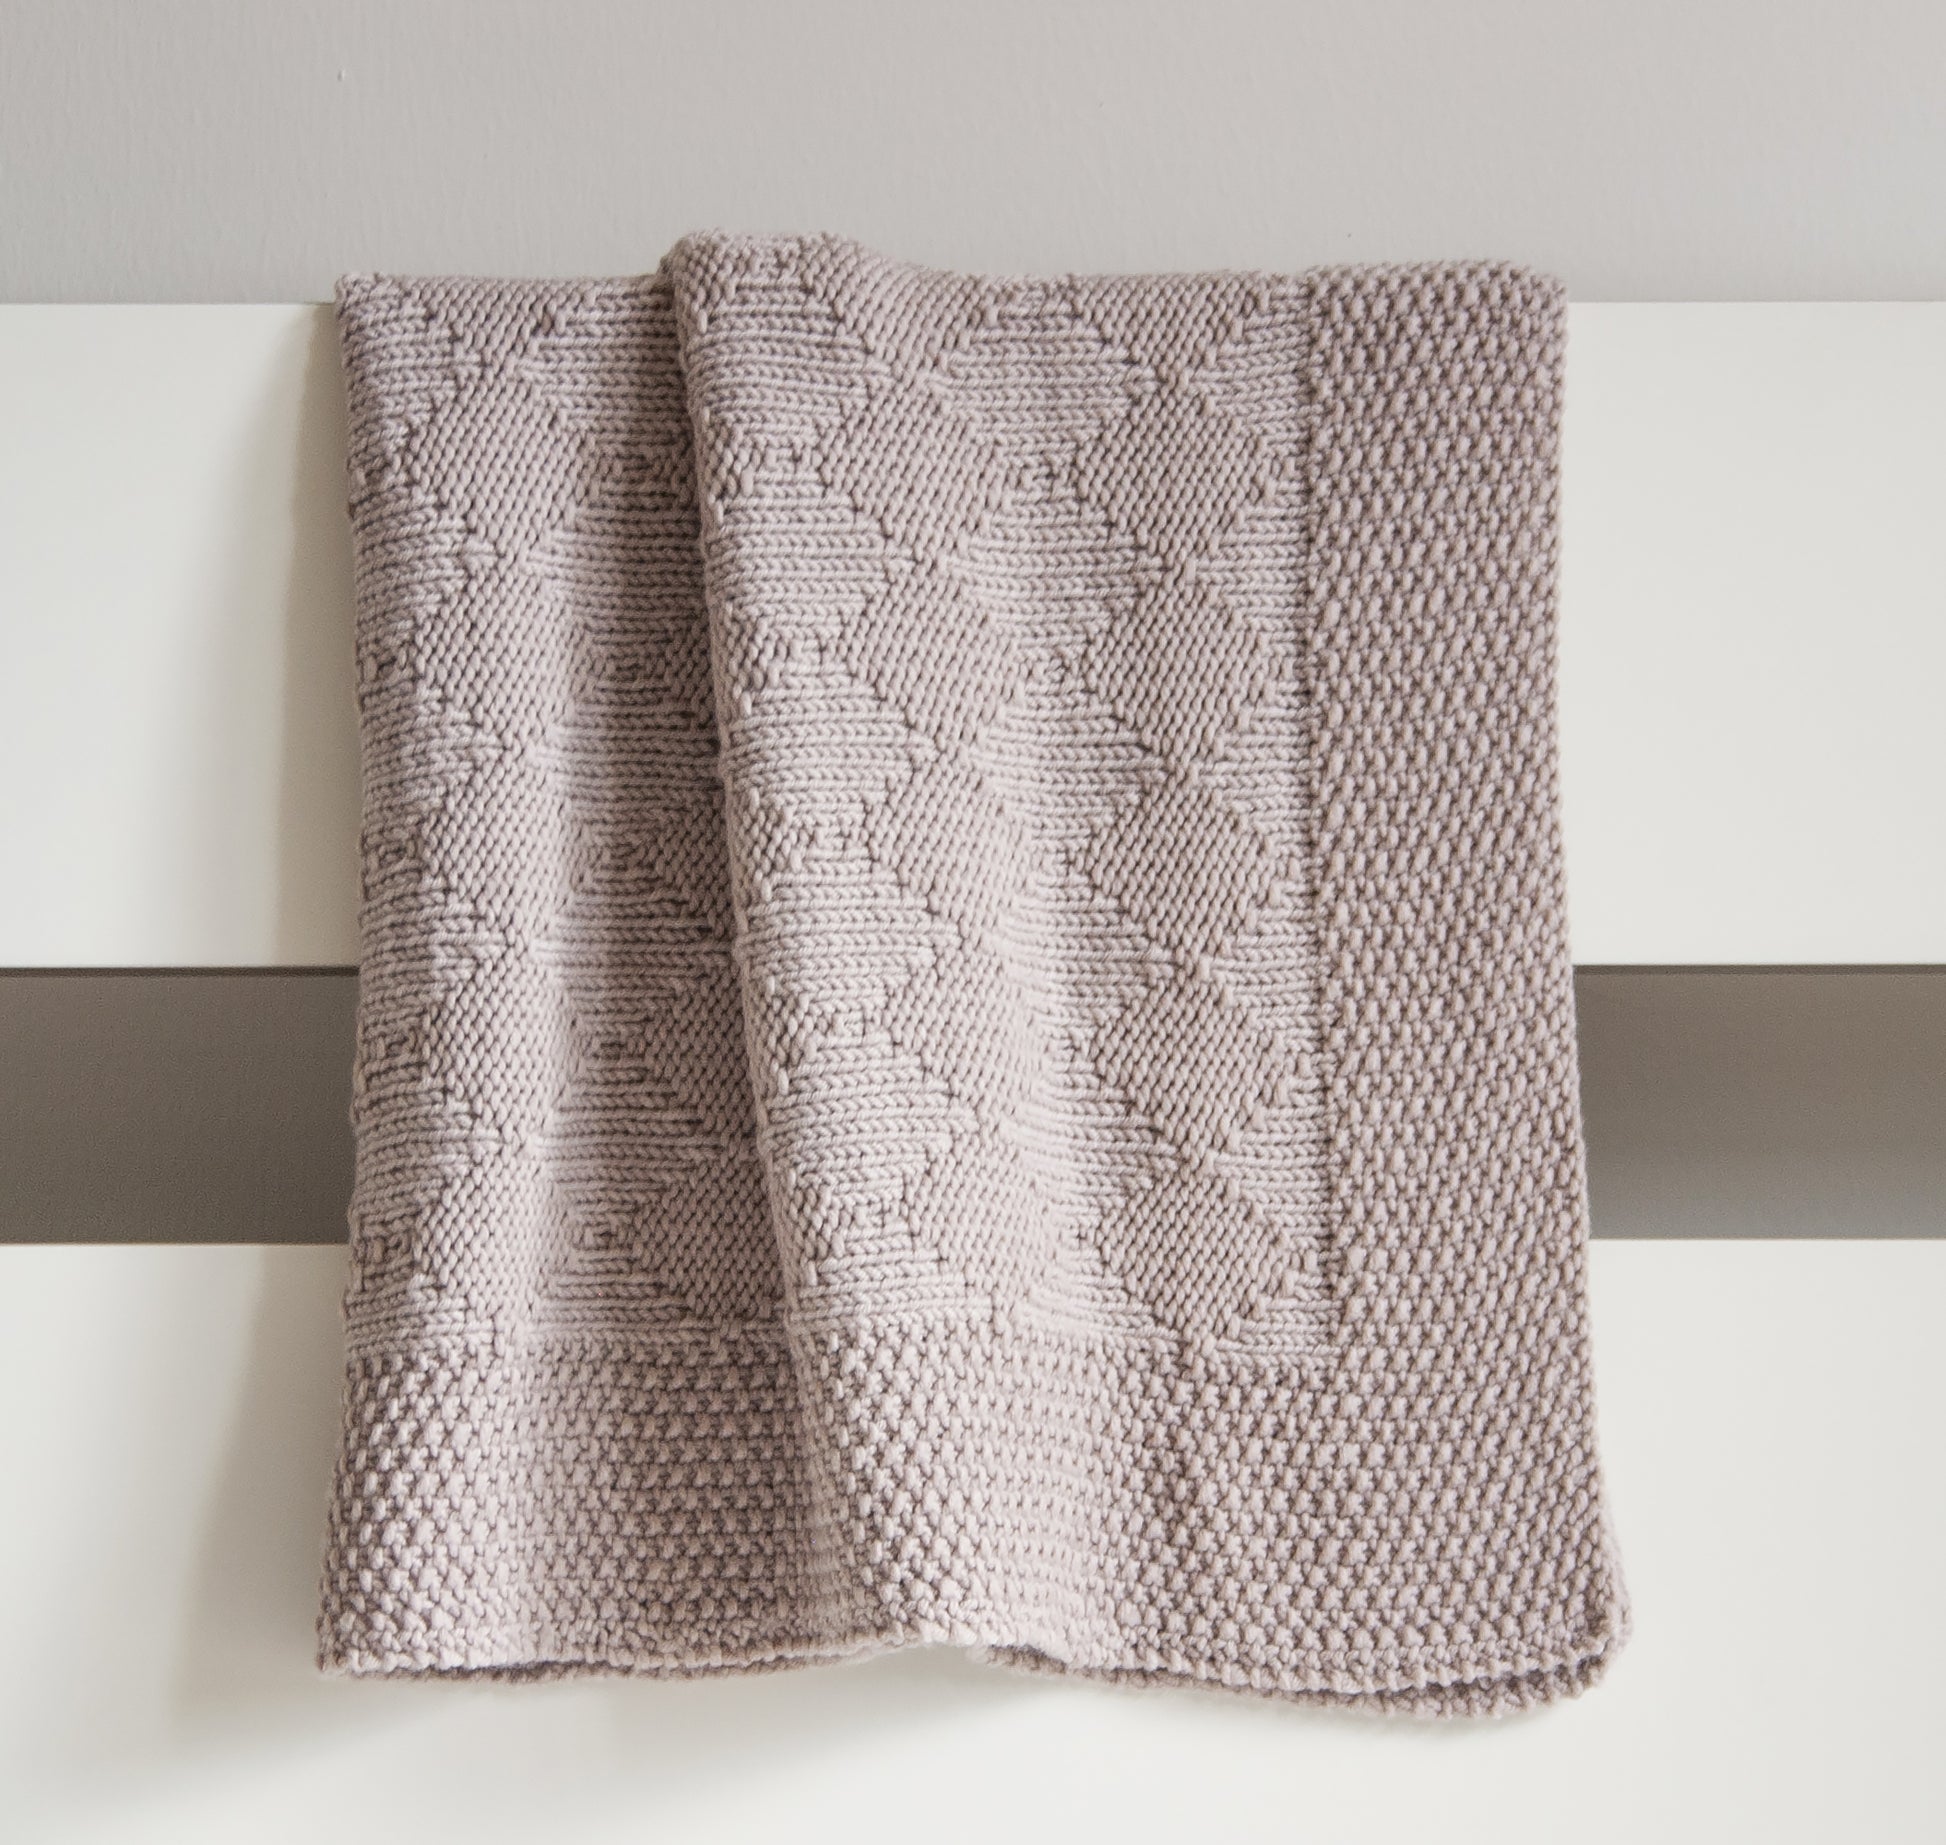 Beige hand-knitted baby blanket in Harlequin pattern